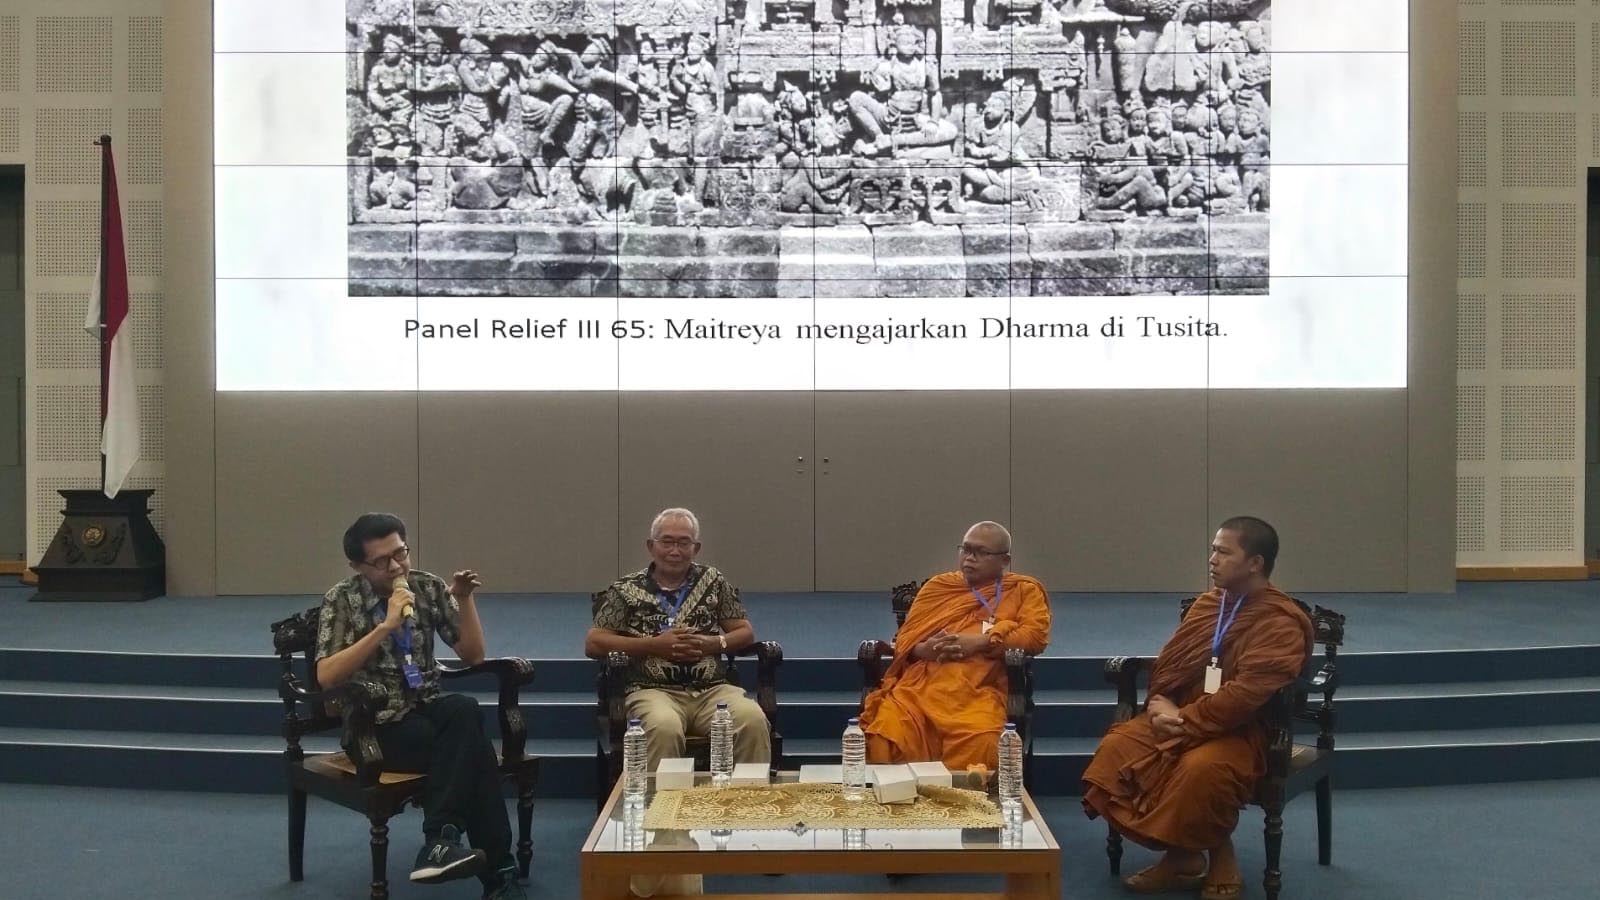 Umat Buddha Berharap Chattra Borobudur Segera Dipasang, Apa Itu Chattra?